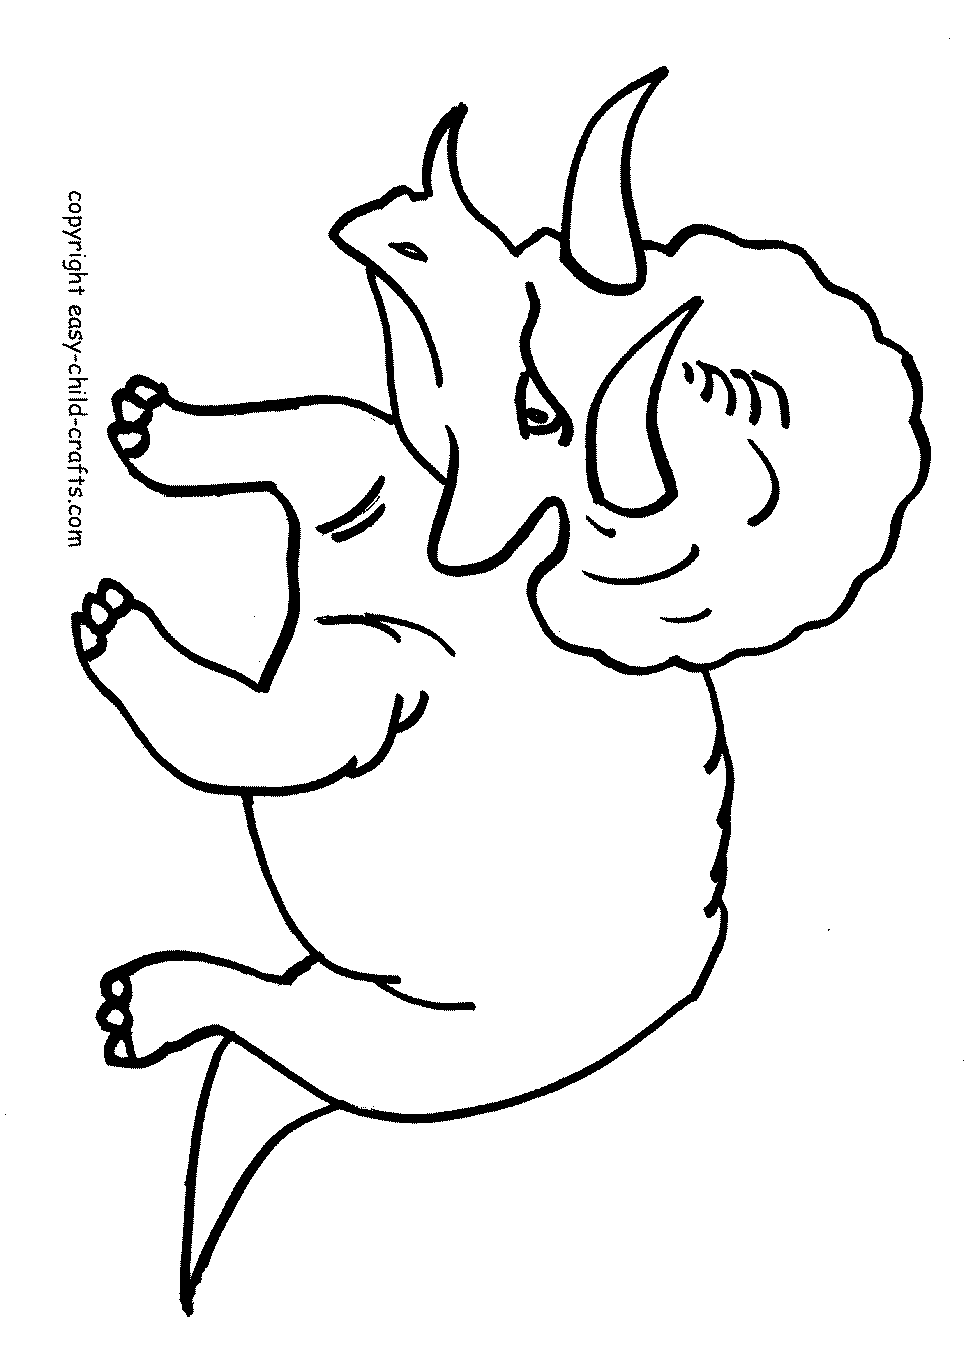 Dinosaur Line Drawing at GetDrawings | Free download